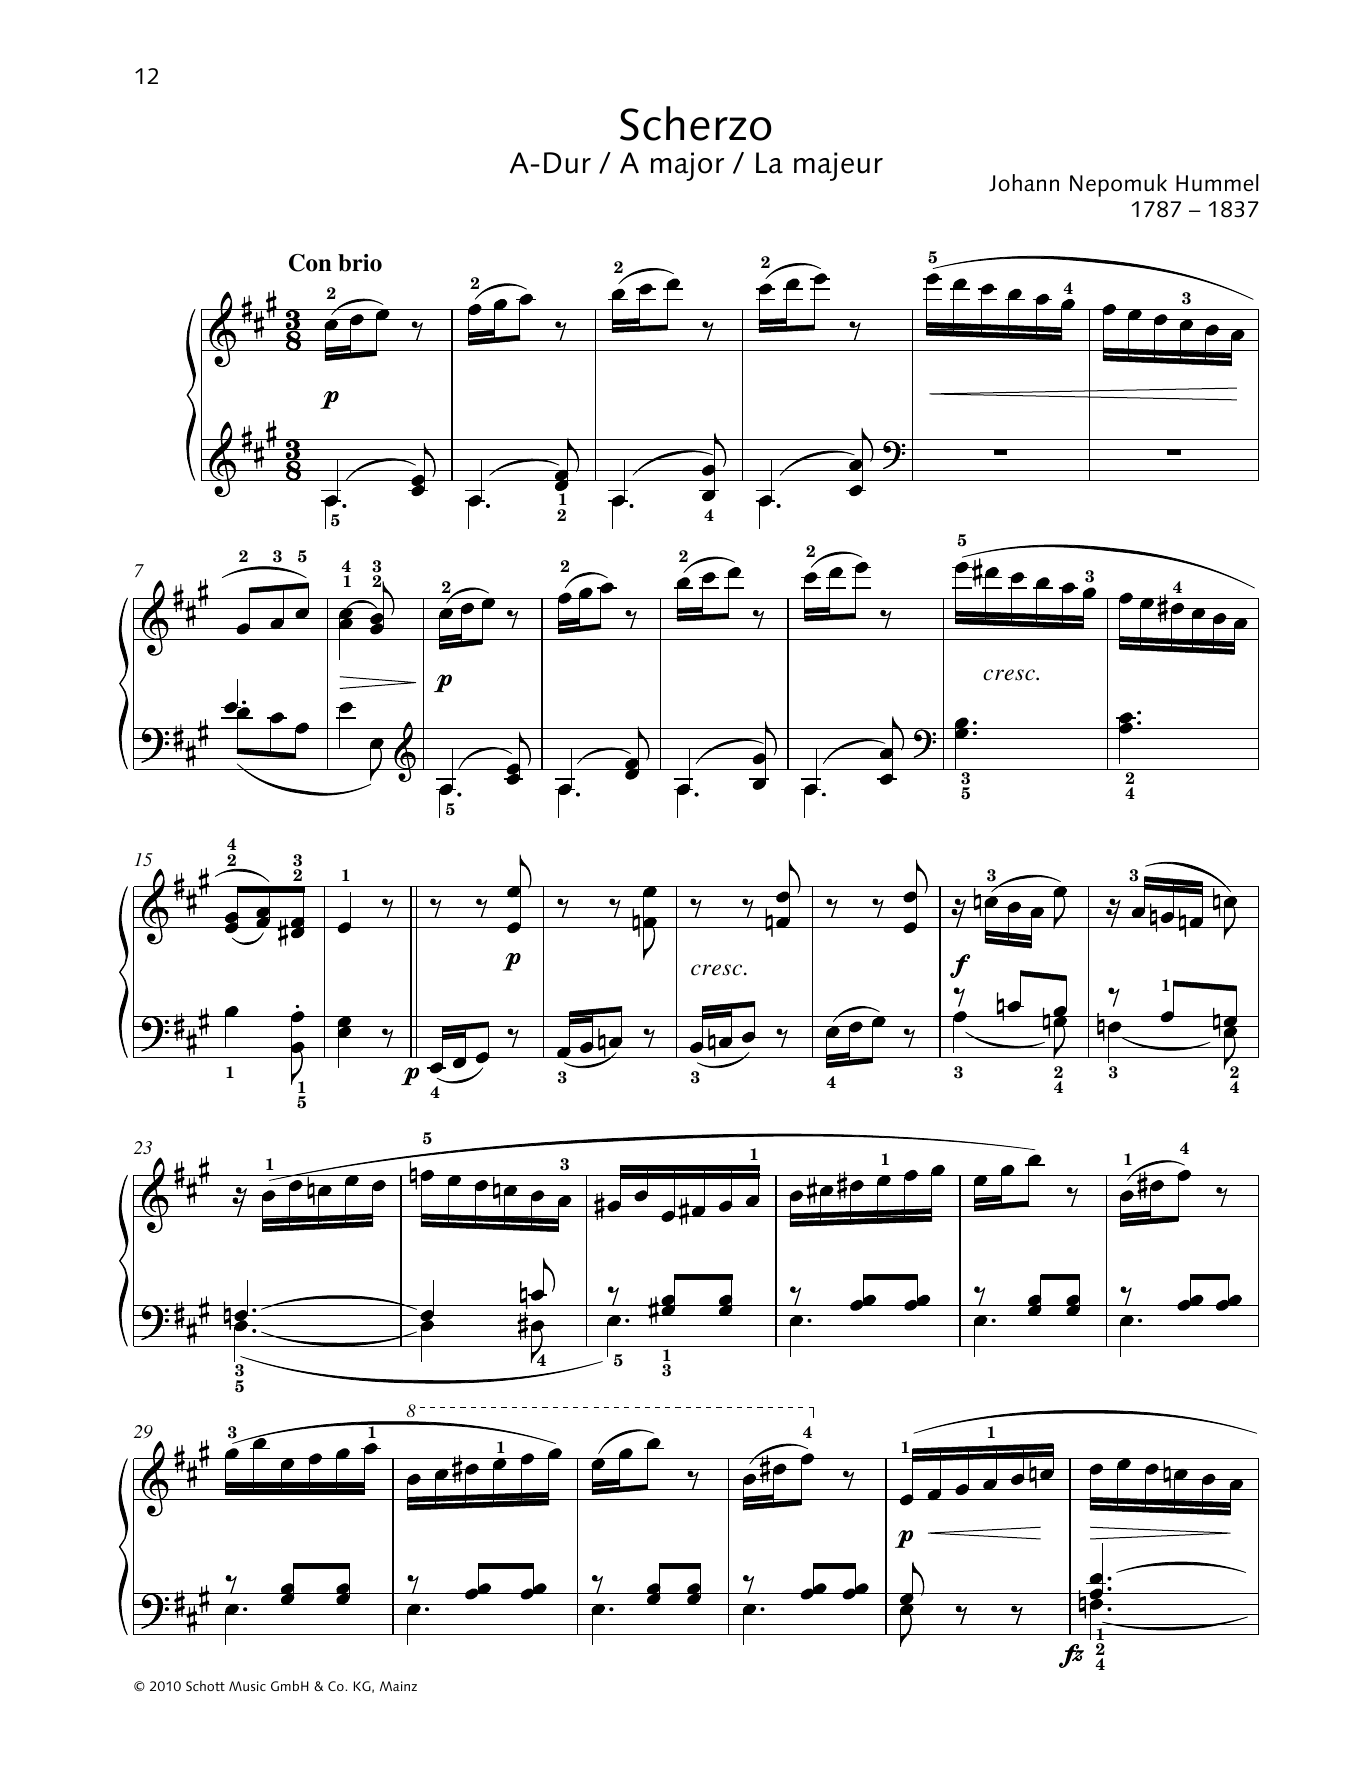 Johann Nepomuk Hummel Scherzo A major Sheet Music Notes & Chords for Piano Solo - Download or Print PDF